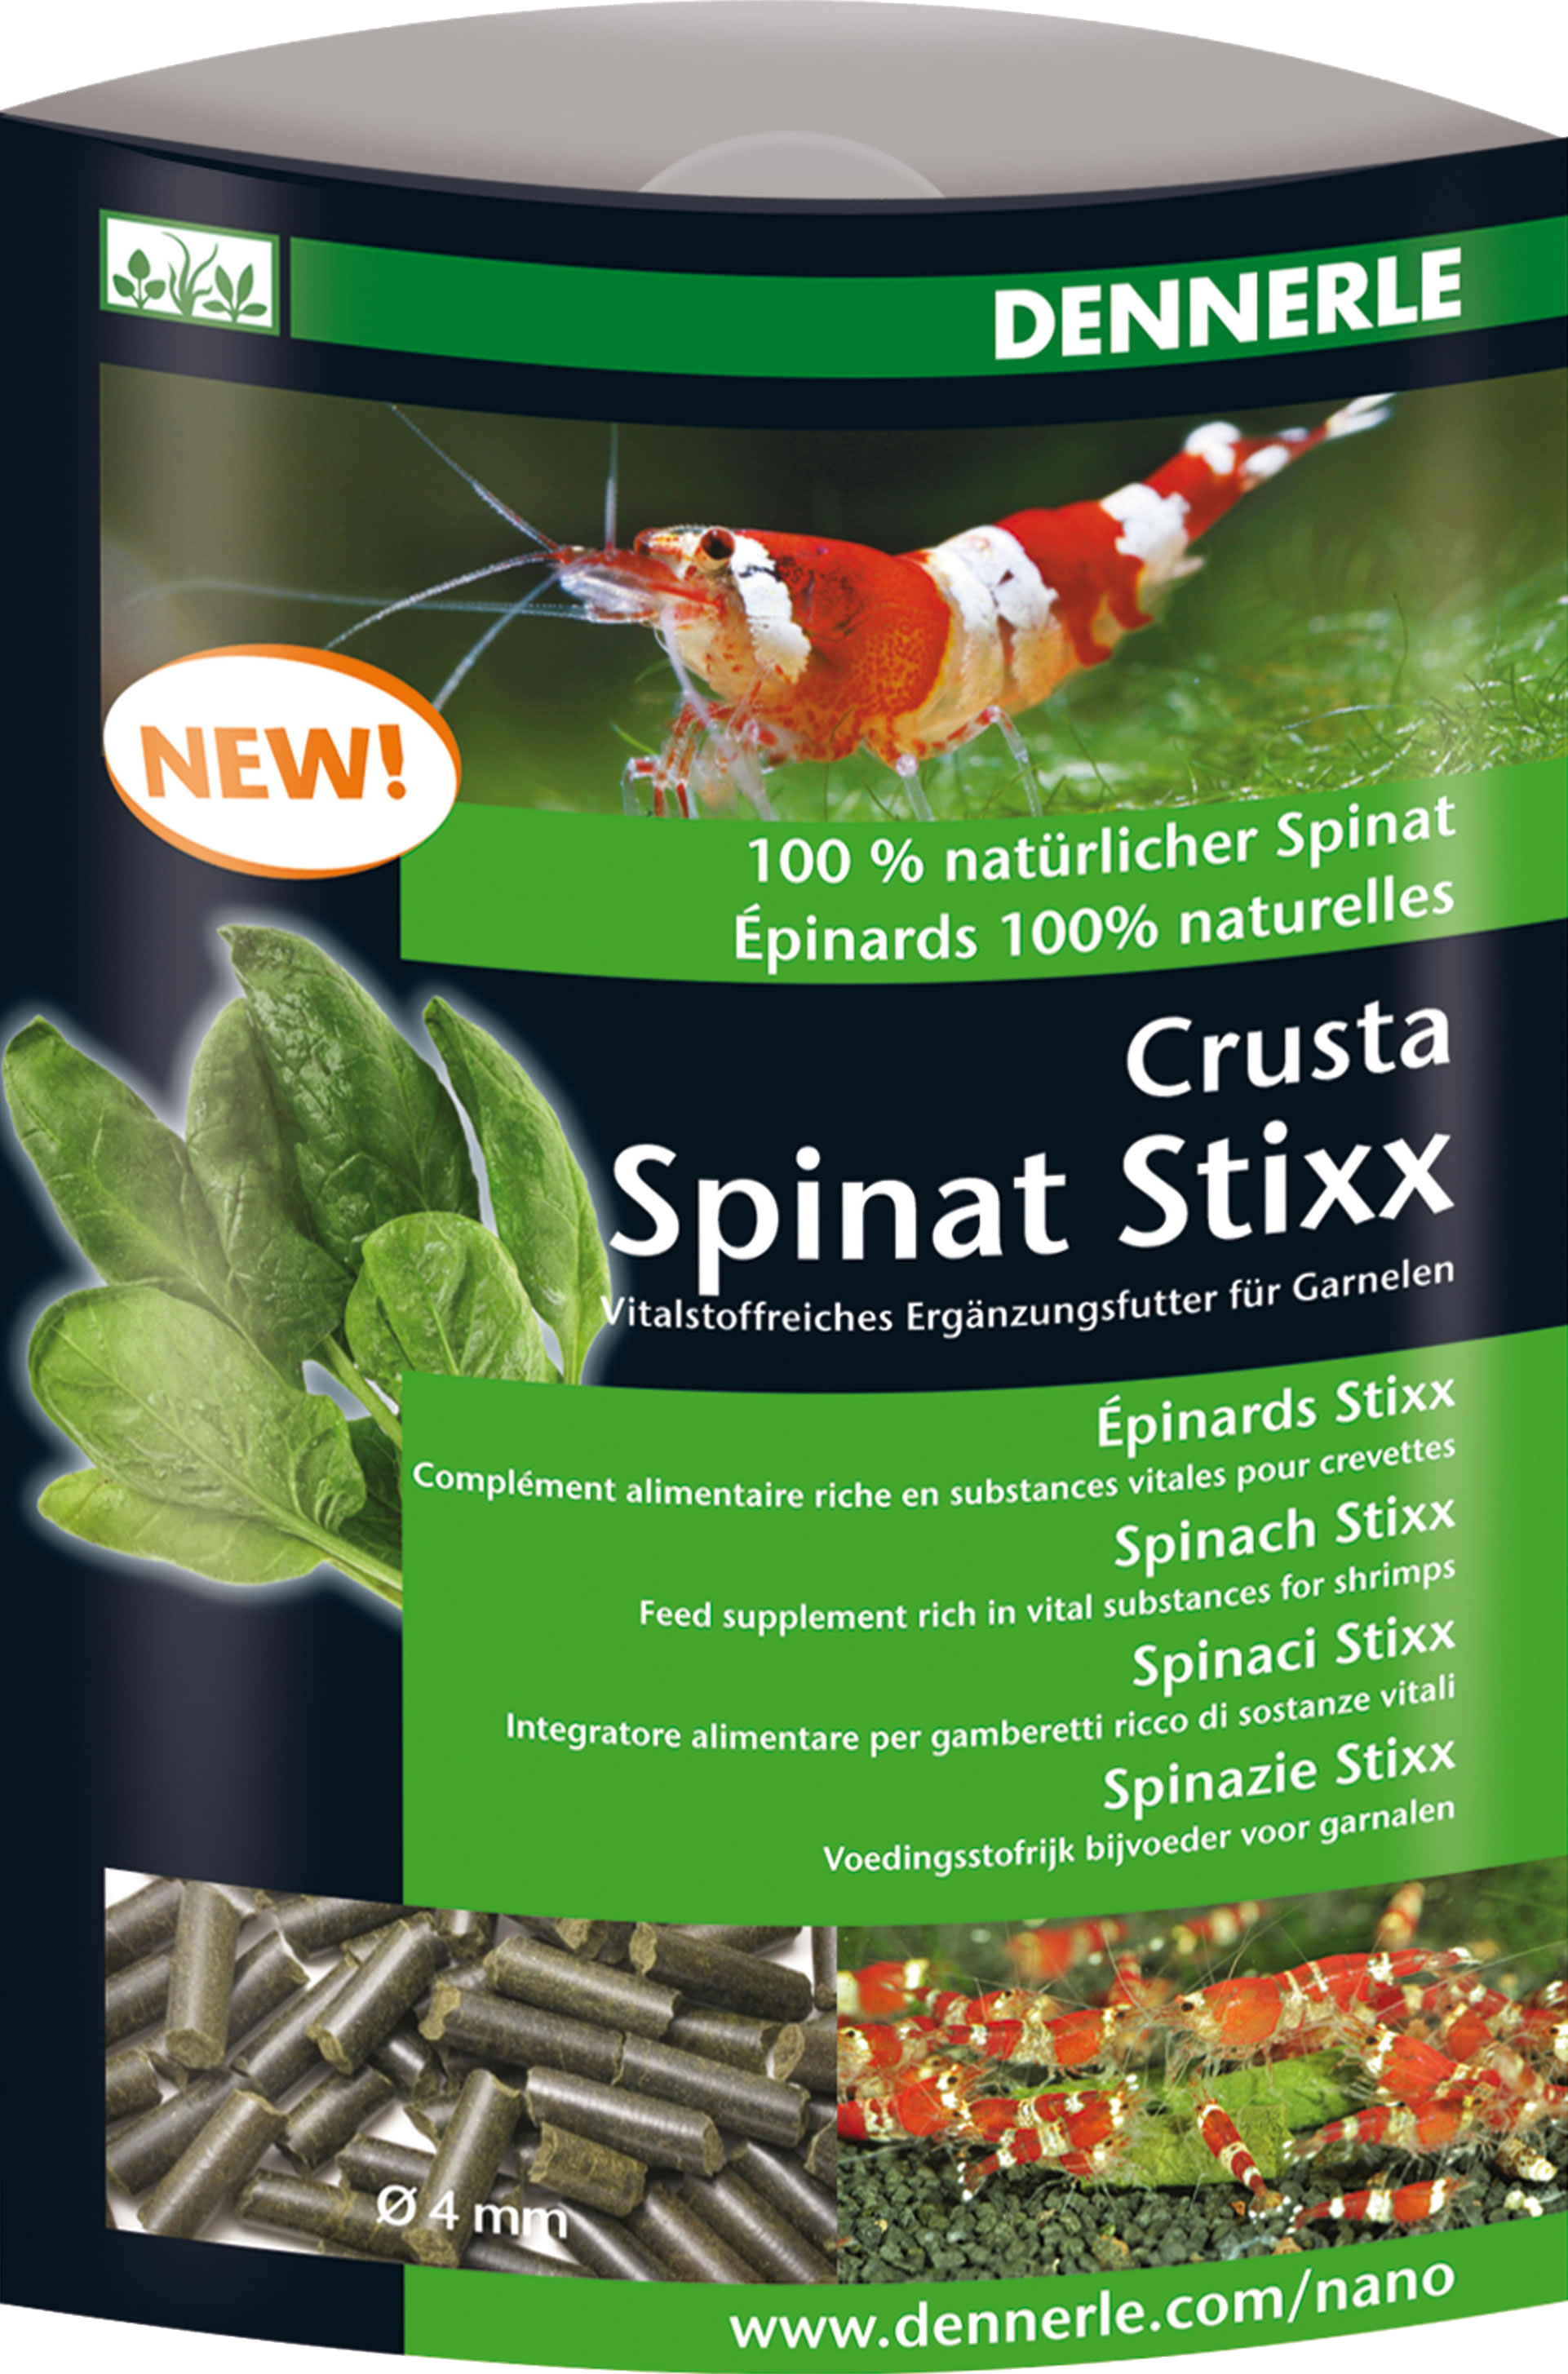 Dennerle Crusta Spinat Stixx - 30 g | aquaristic.net